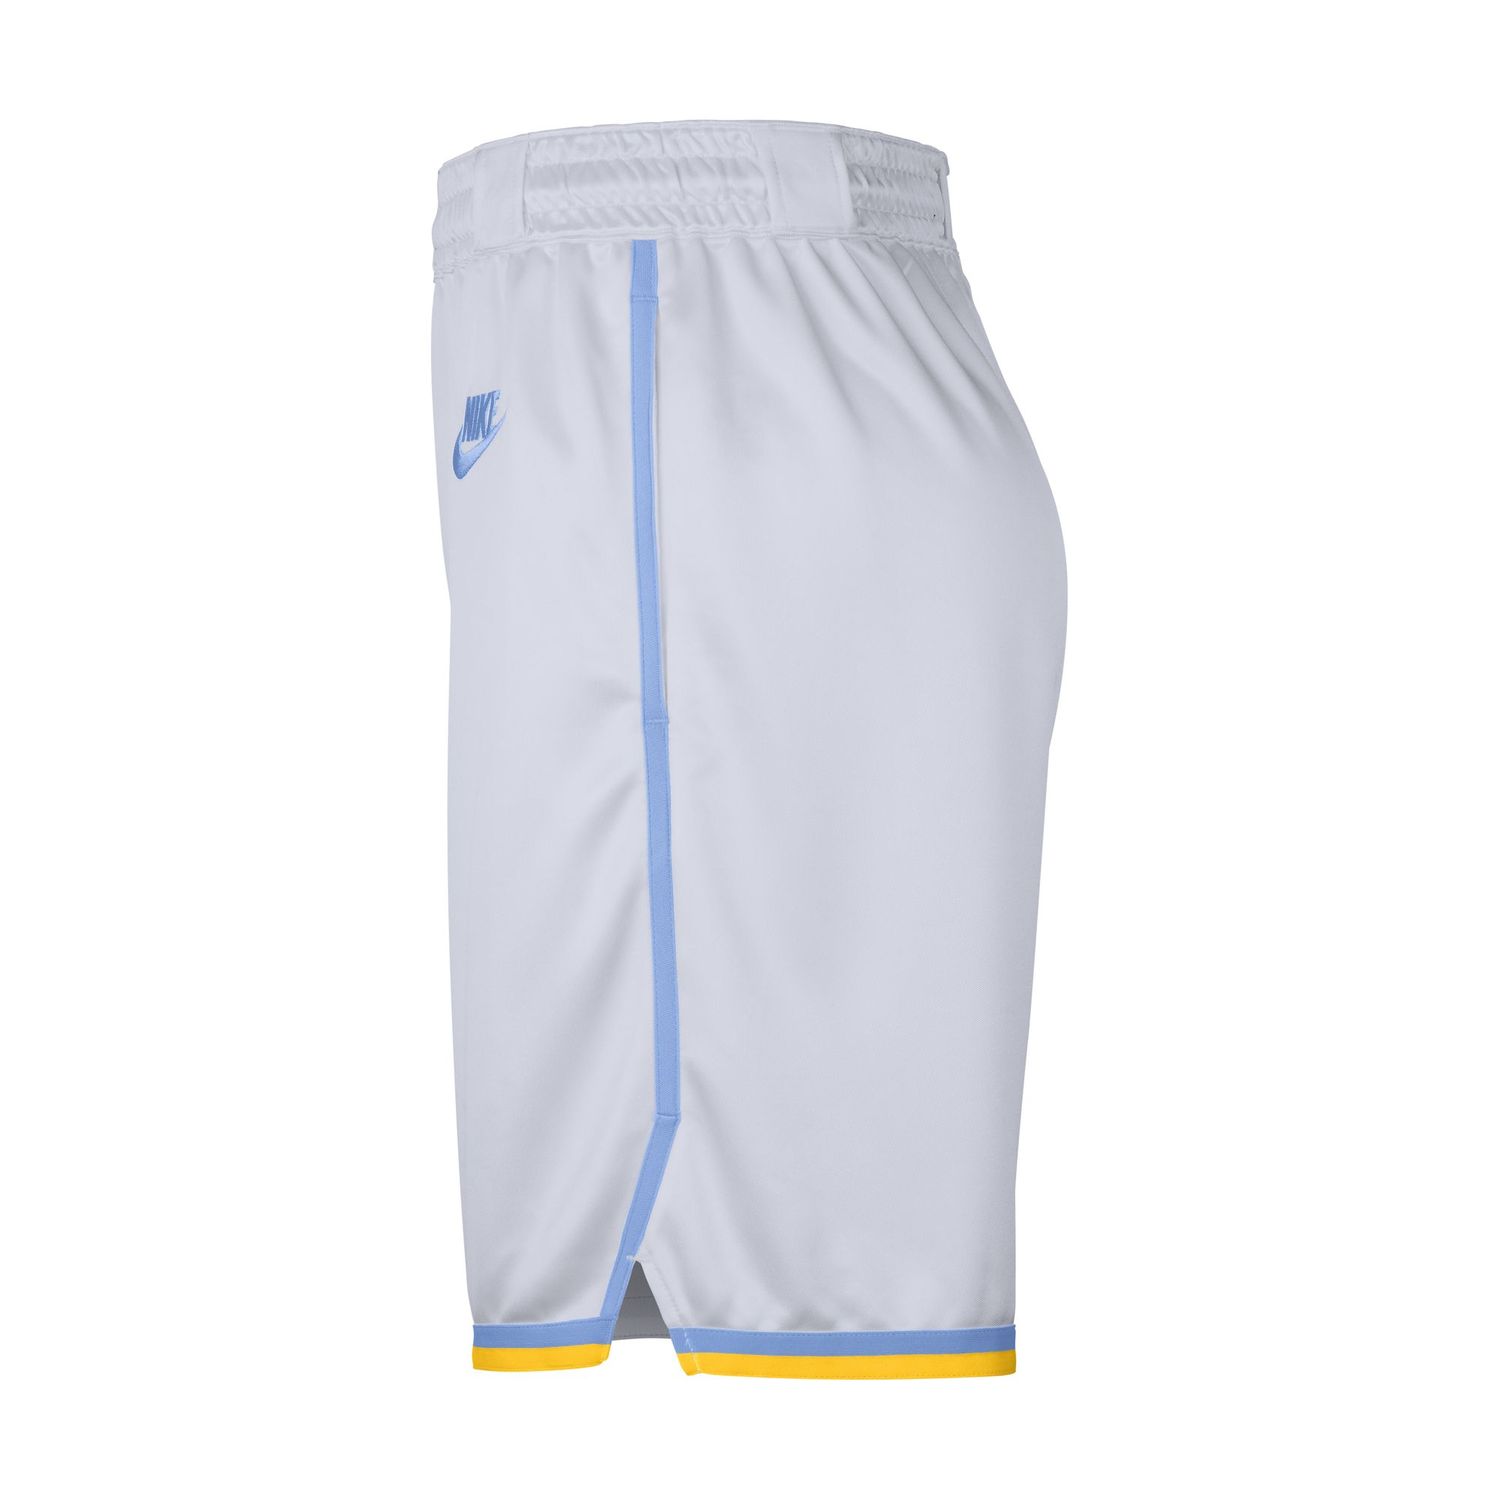 Nike NBA Los Angeles Lakers Classic Edition Swingman Shorts